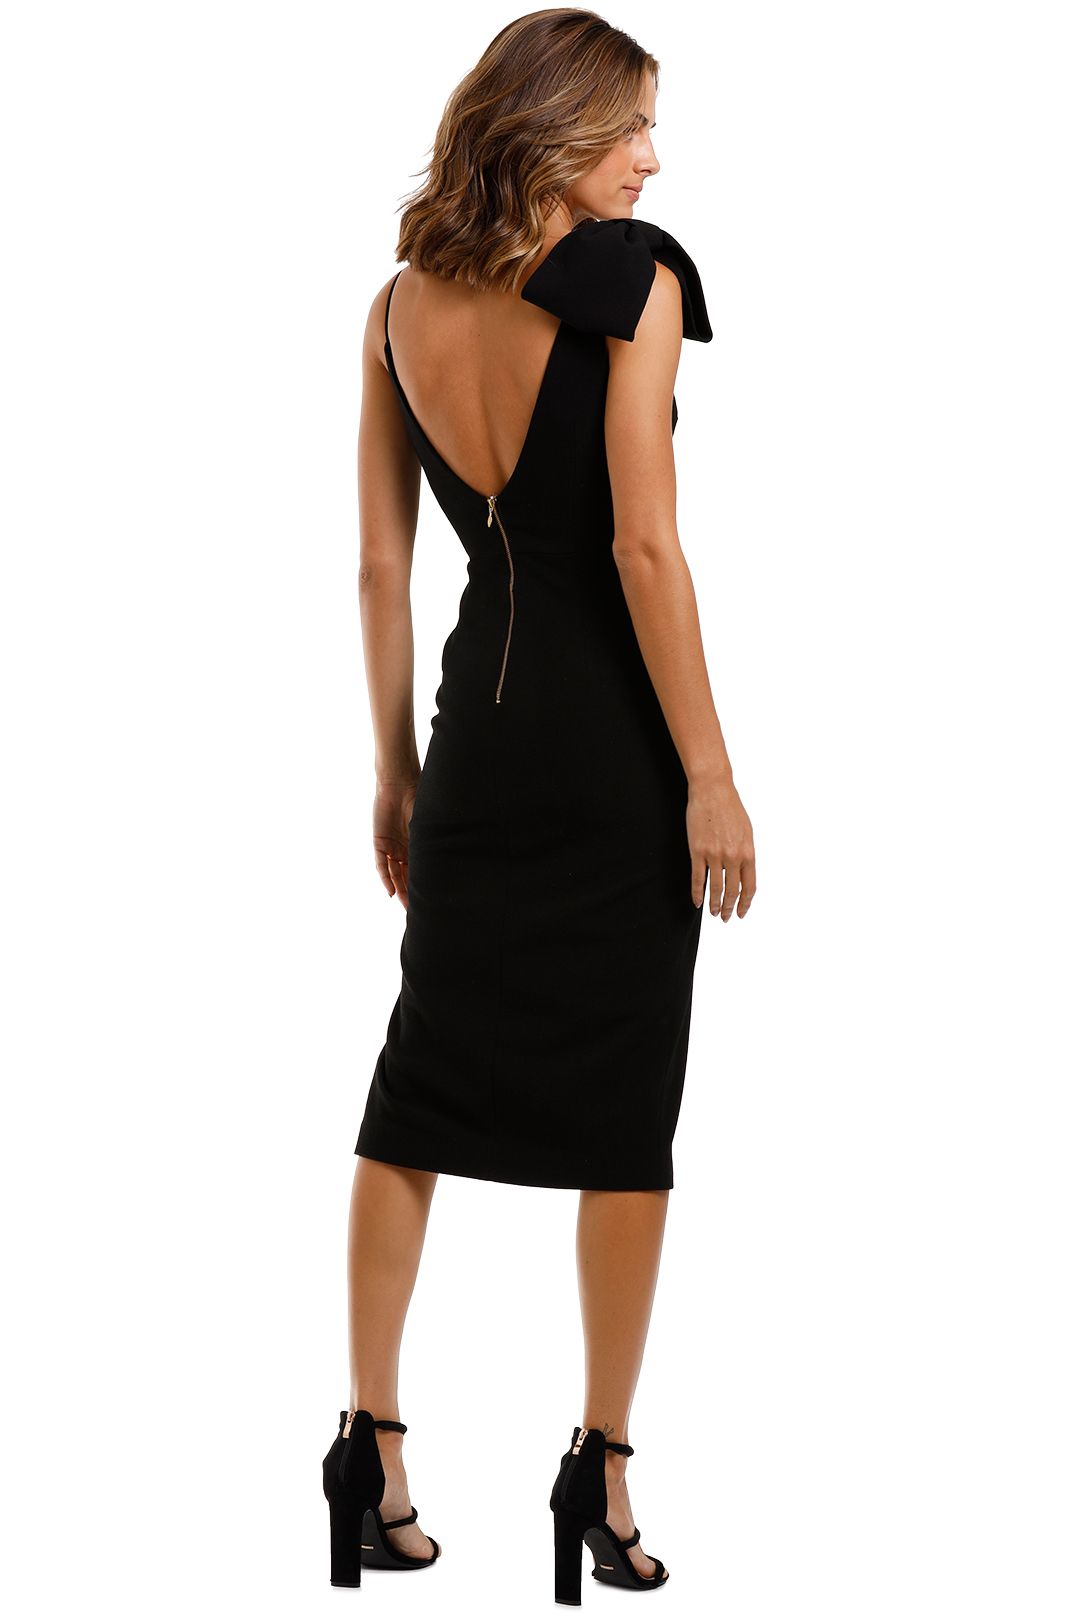 Rebecca Vallance Love Bow Dress Black Side Split